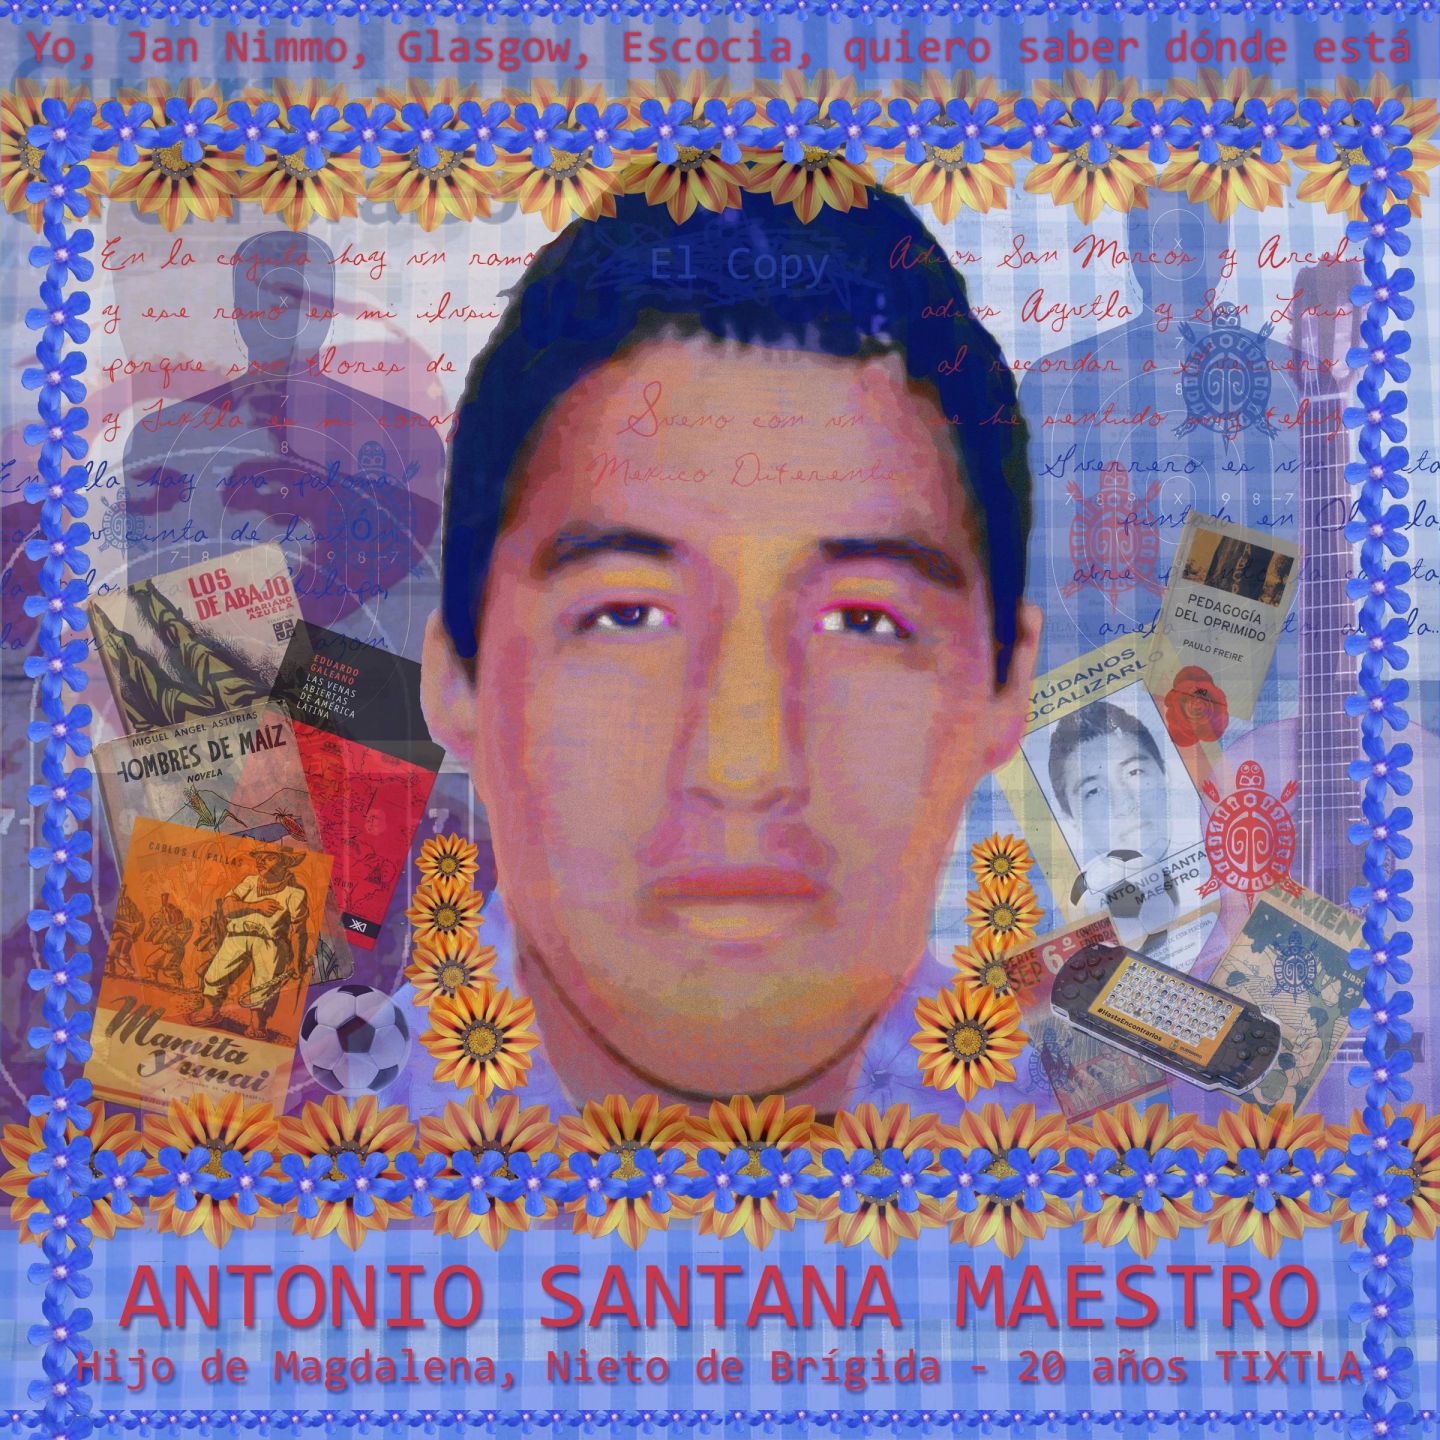 Portrait of Antonio Santana Maestro by Jan Nimo